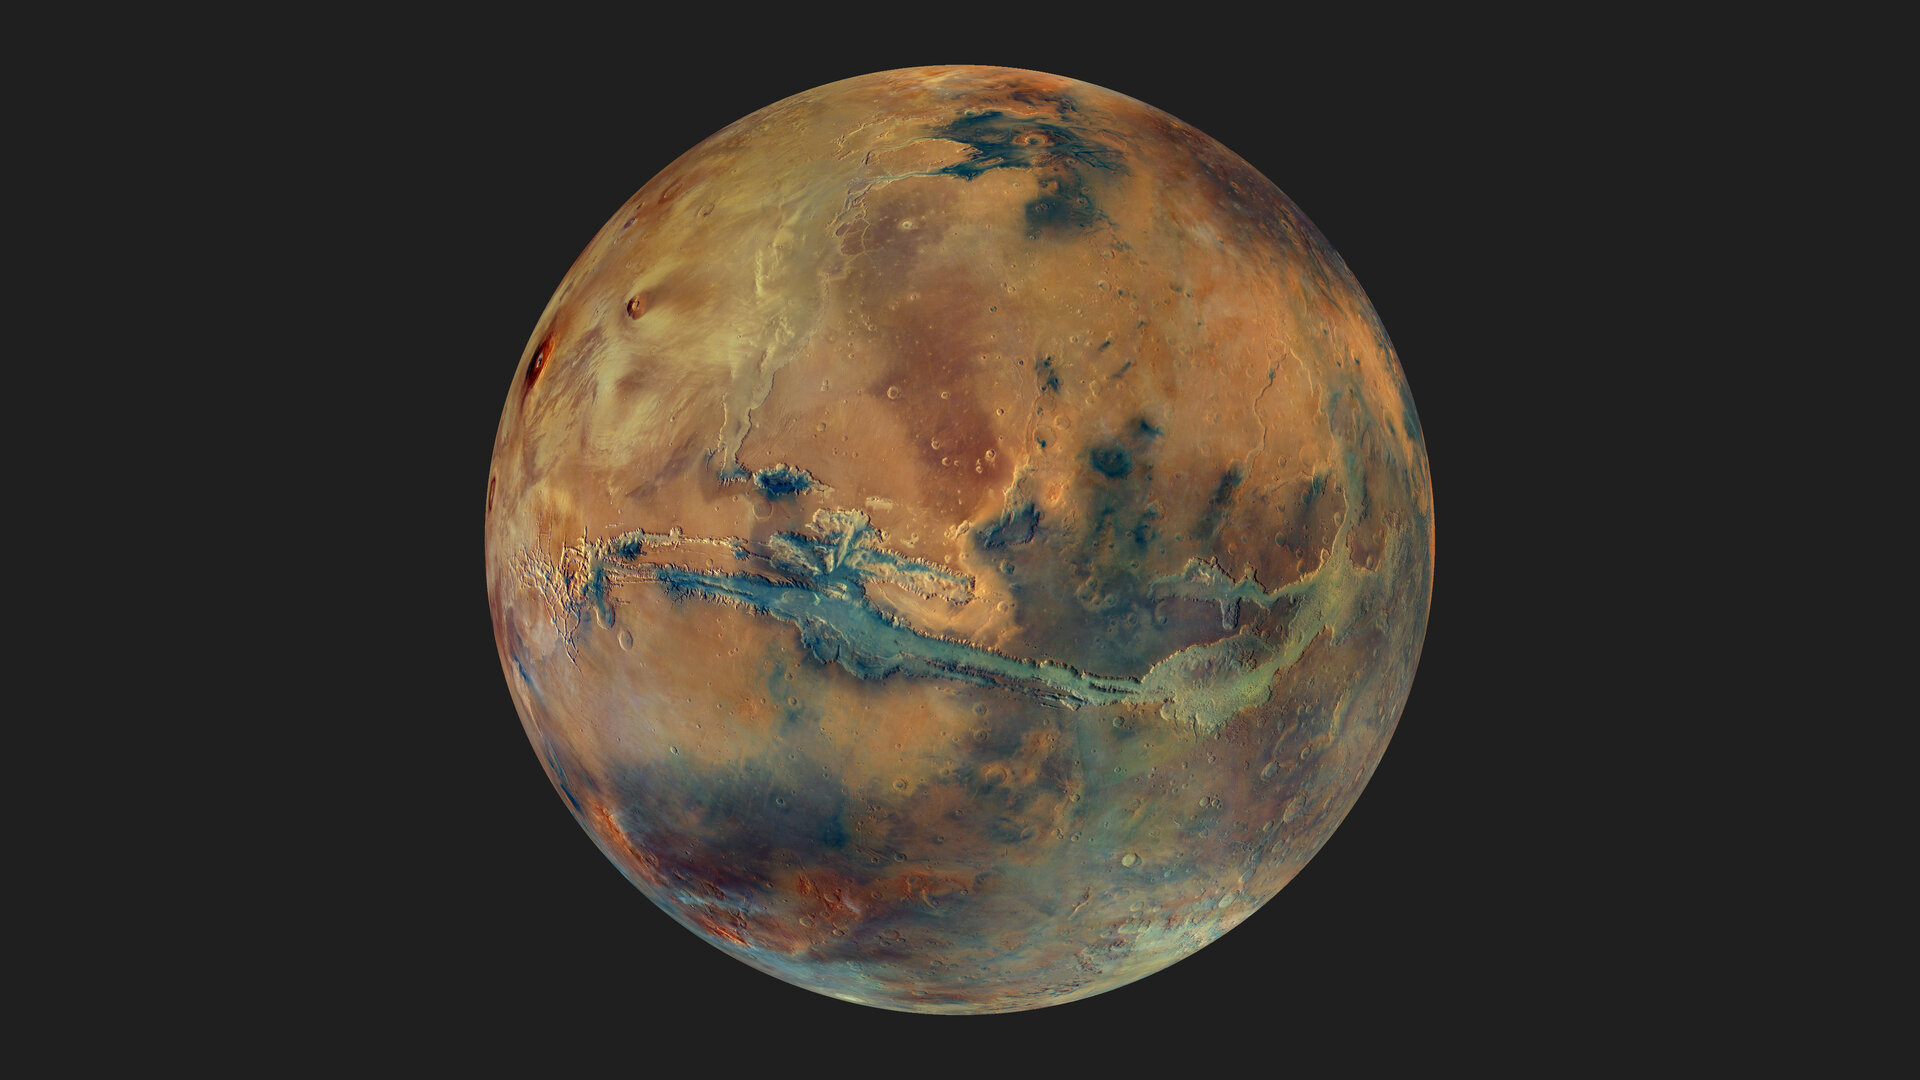 New Mars mosaic image by Mars Express